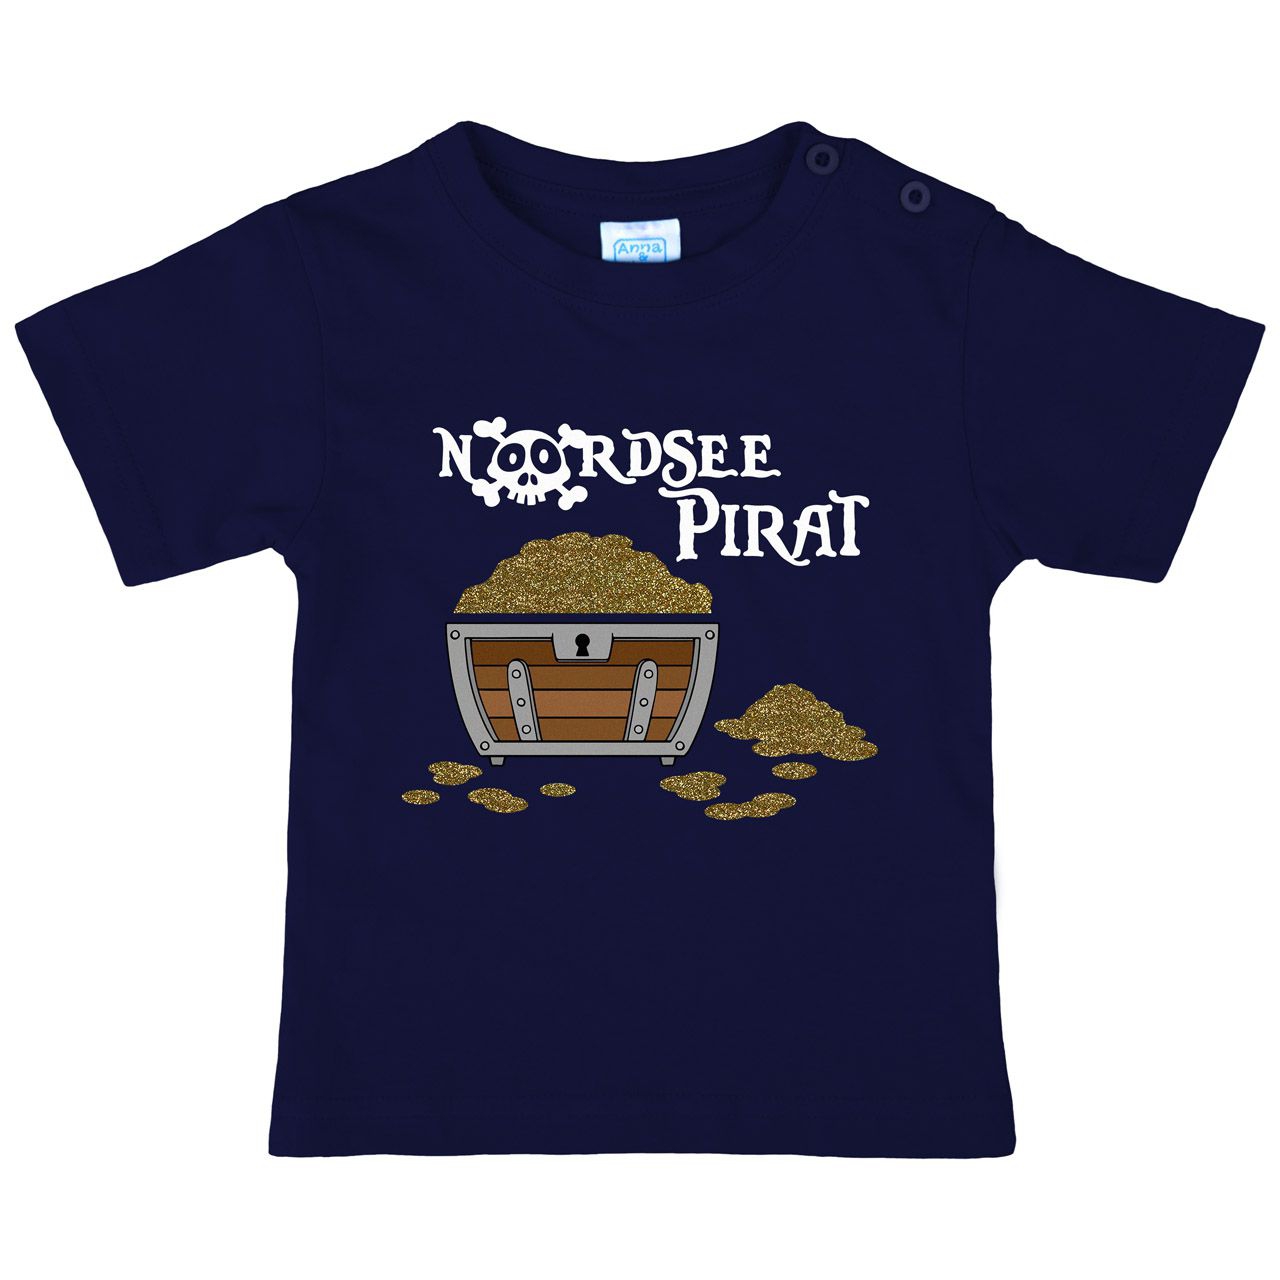 Nordsee Pirat Truhe Gold Glitzer Kinder T-Shirt navy 110 / 116